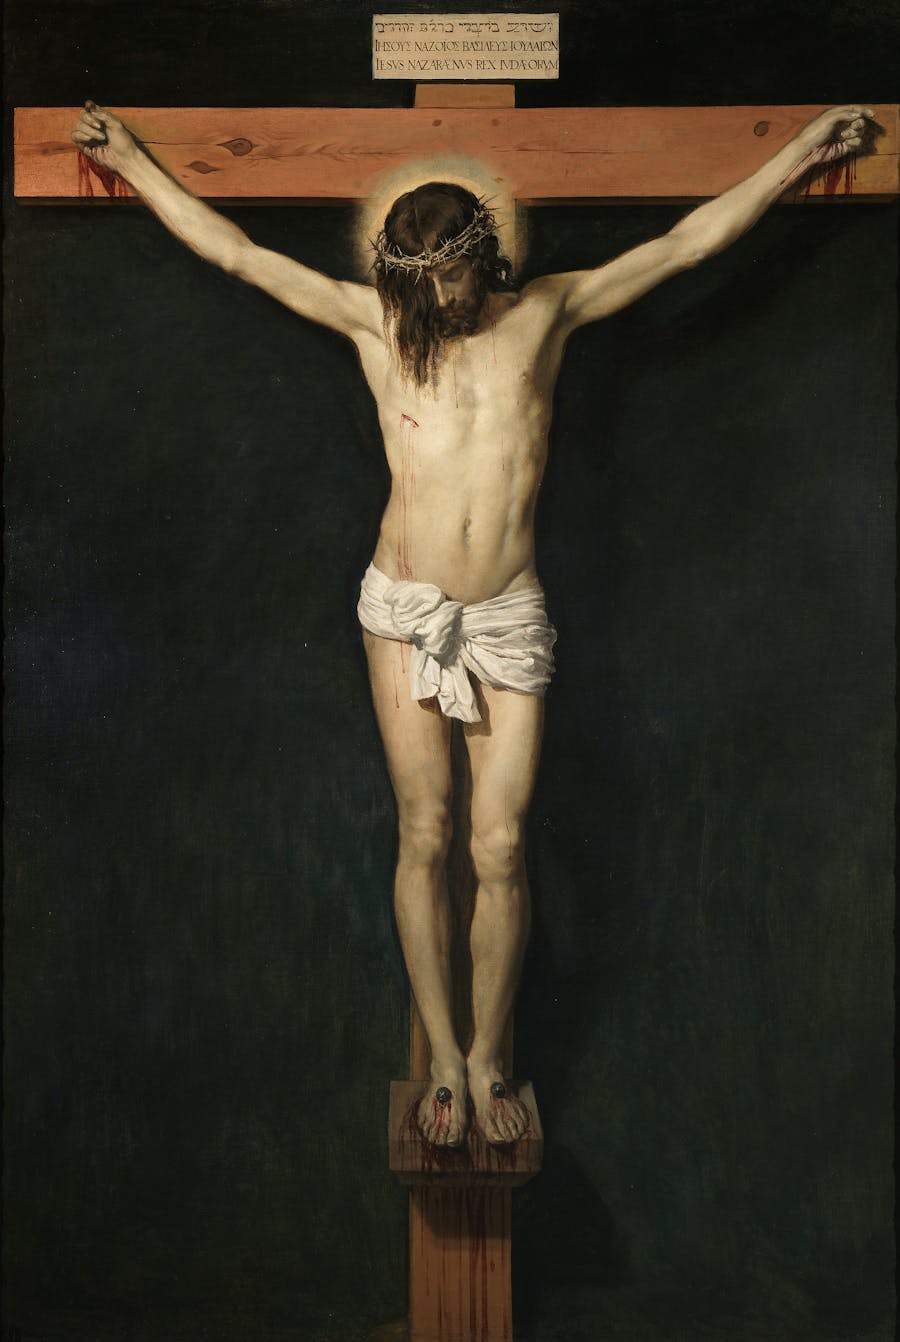 Diego Velázquez, Christ Crucified. 1632, oil on canvas. Public domain image